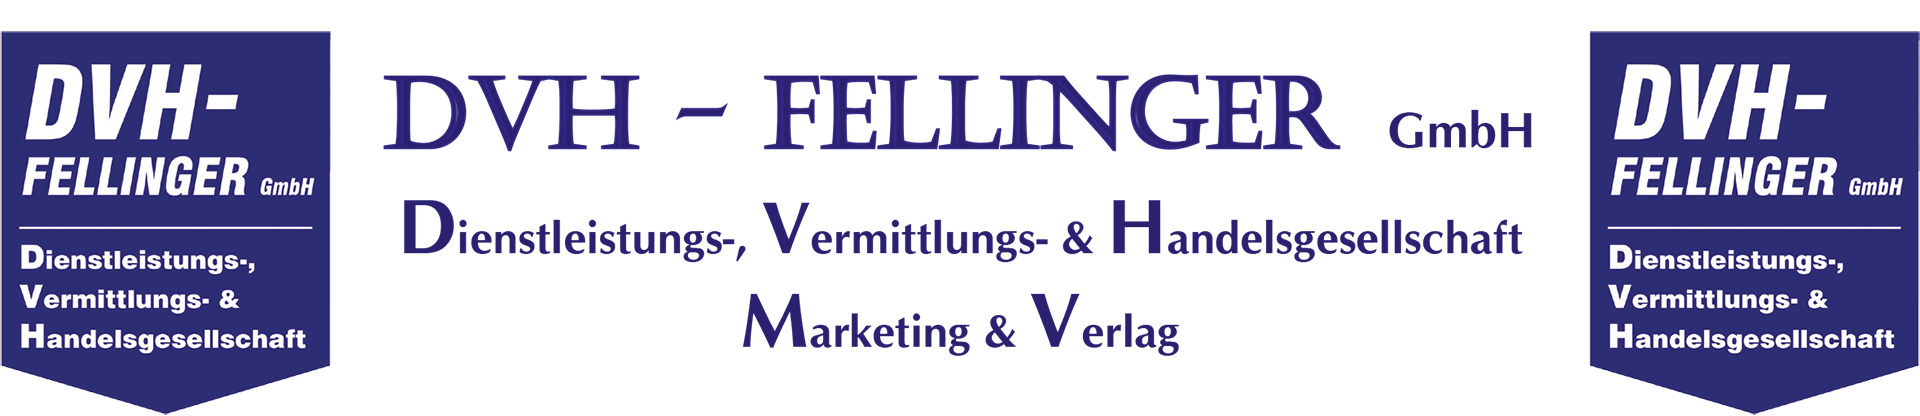 Musterseite-Hosting - DVH-Fellinger GmbH